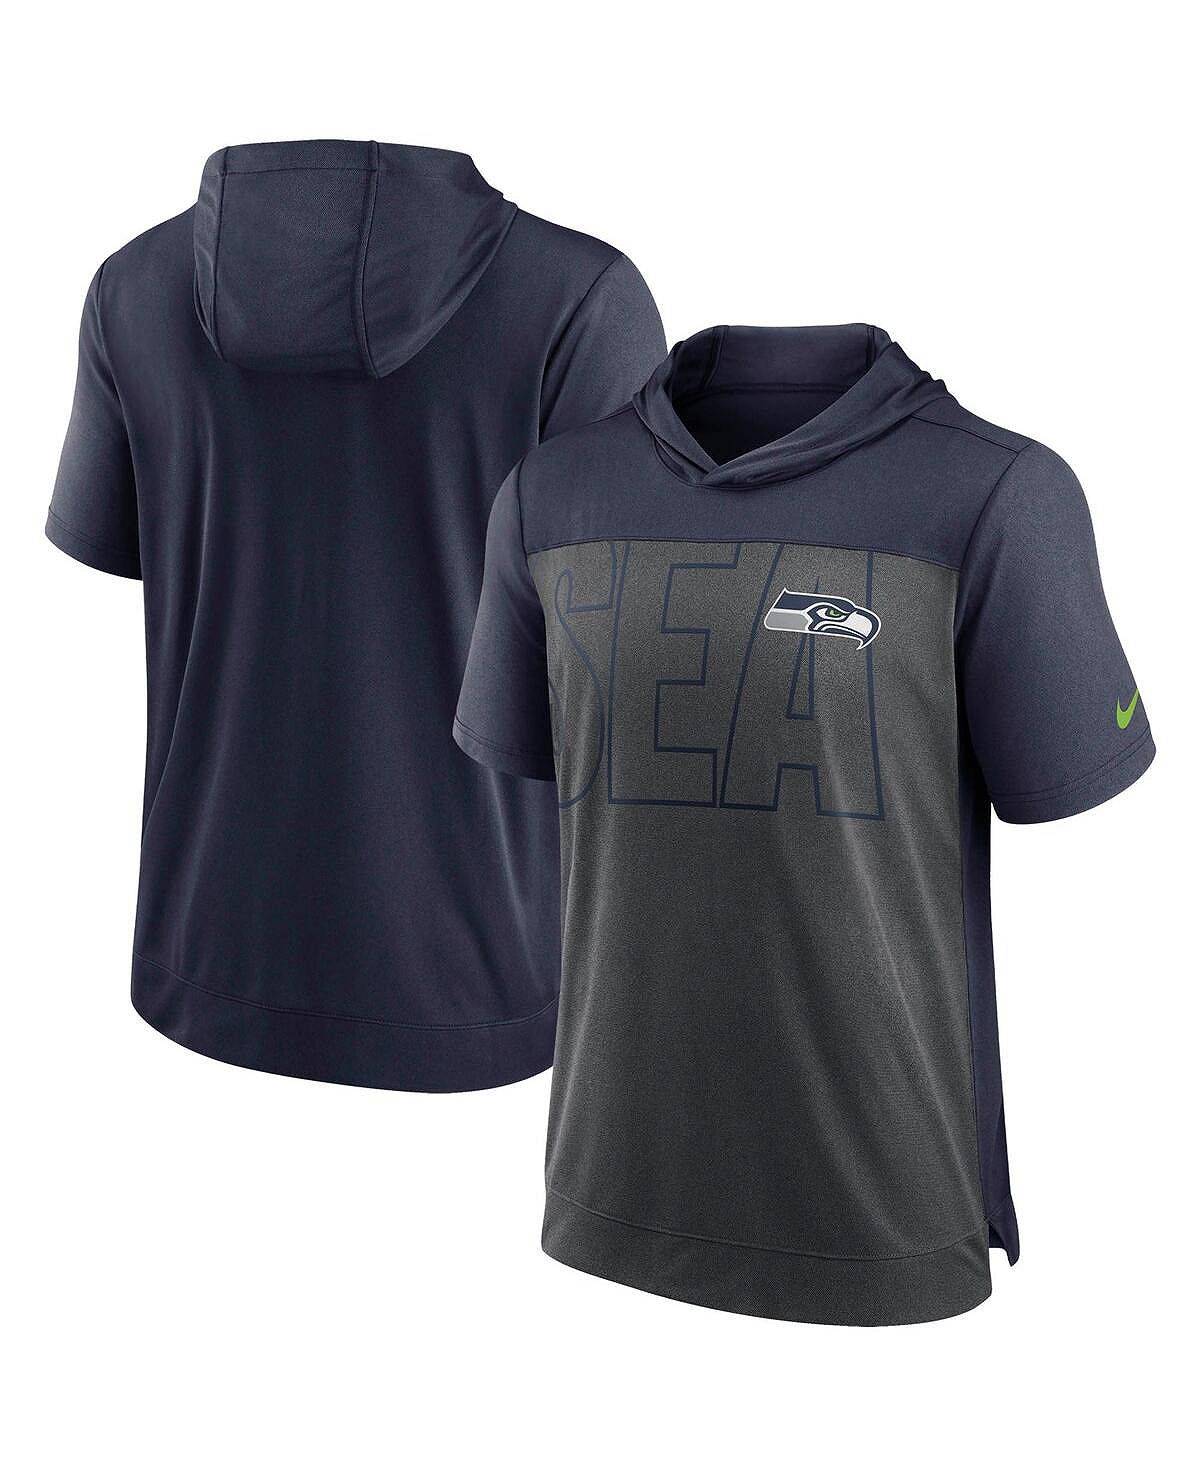 Мужская футболка с капюшоном цвета темно-серого меланжевого цвета college navy seattle seahawks performance hoodie Nike, мульти